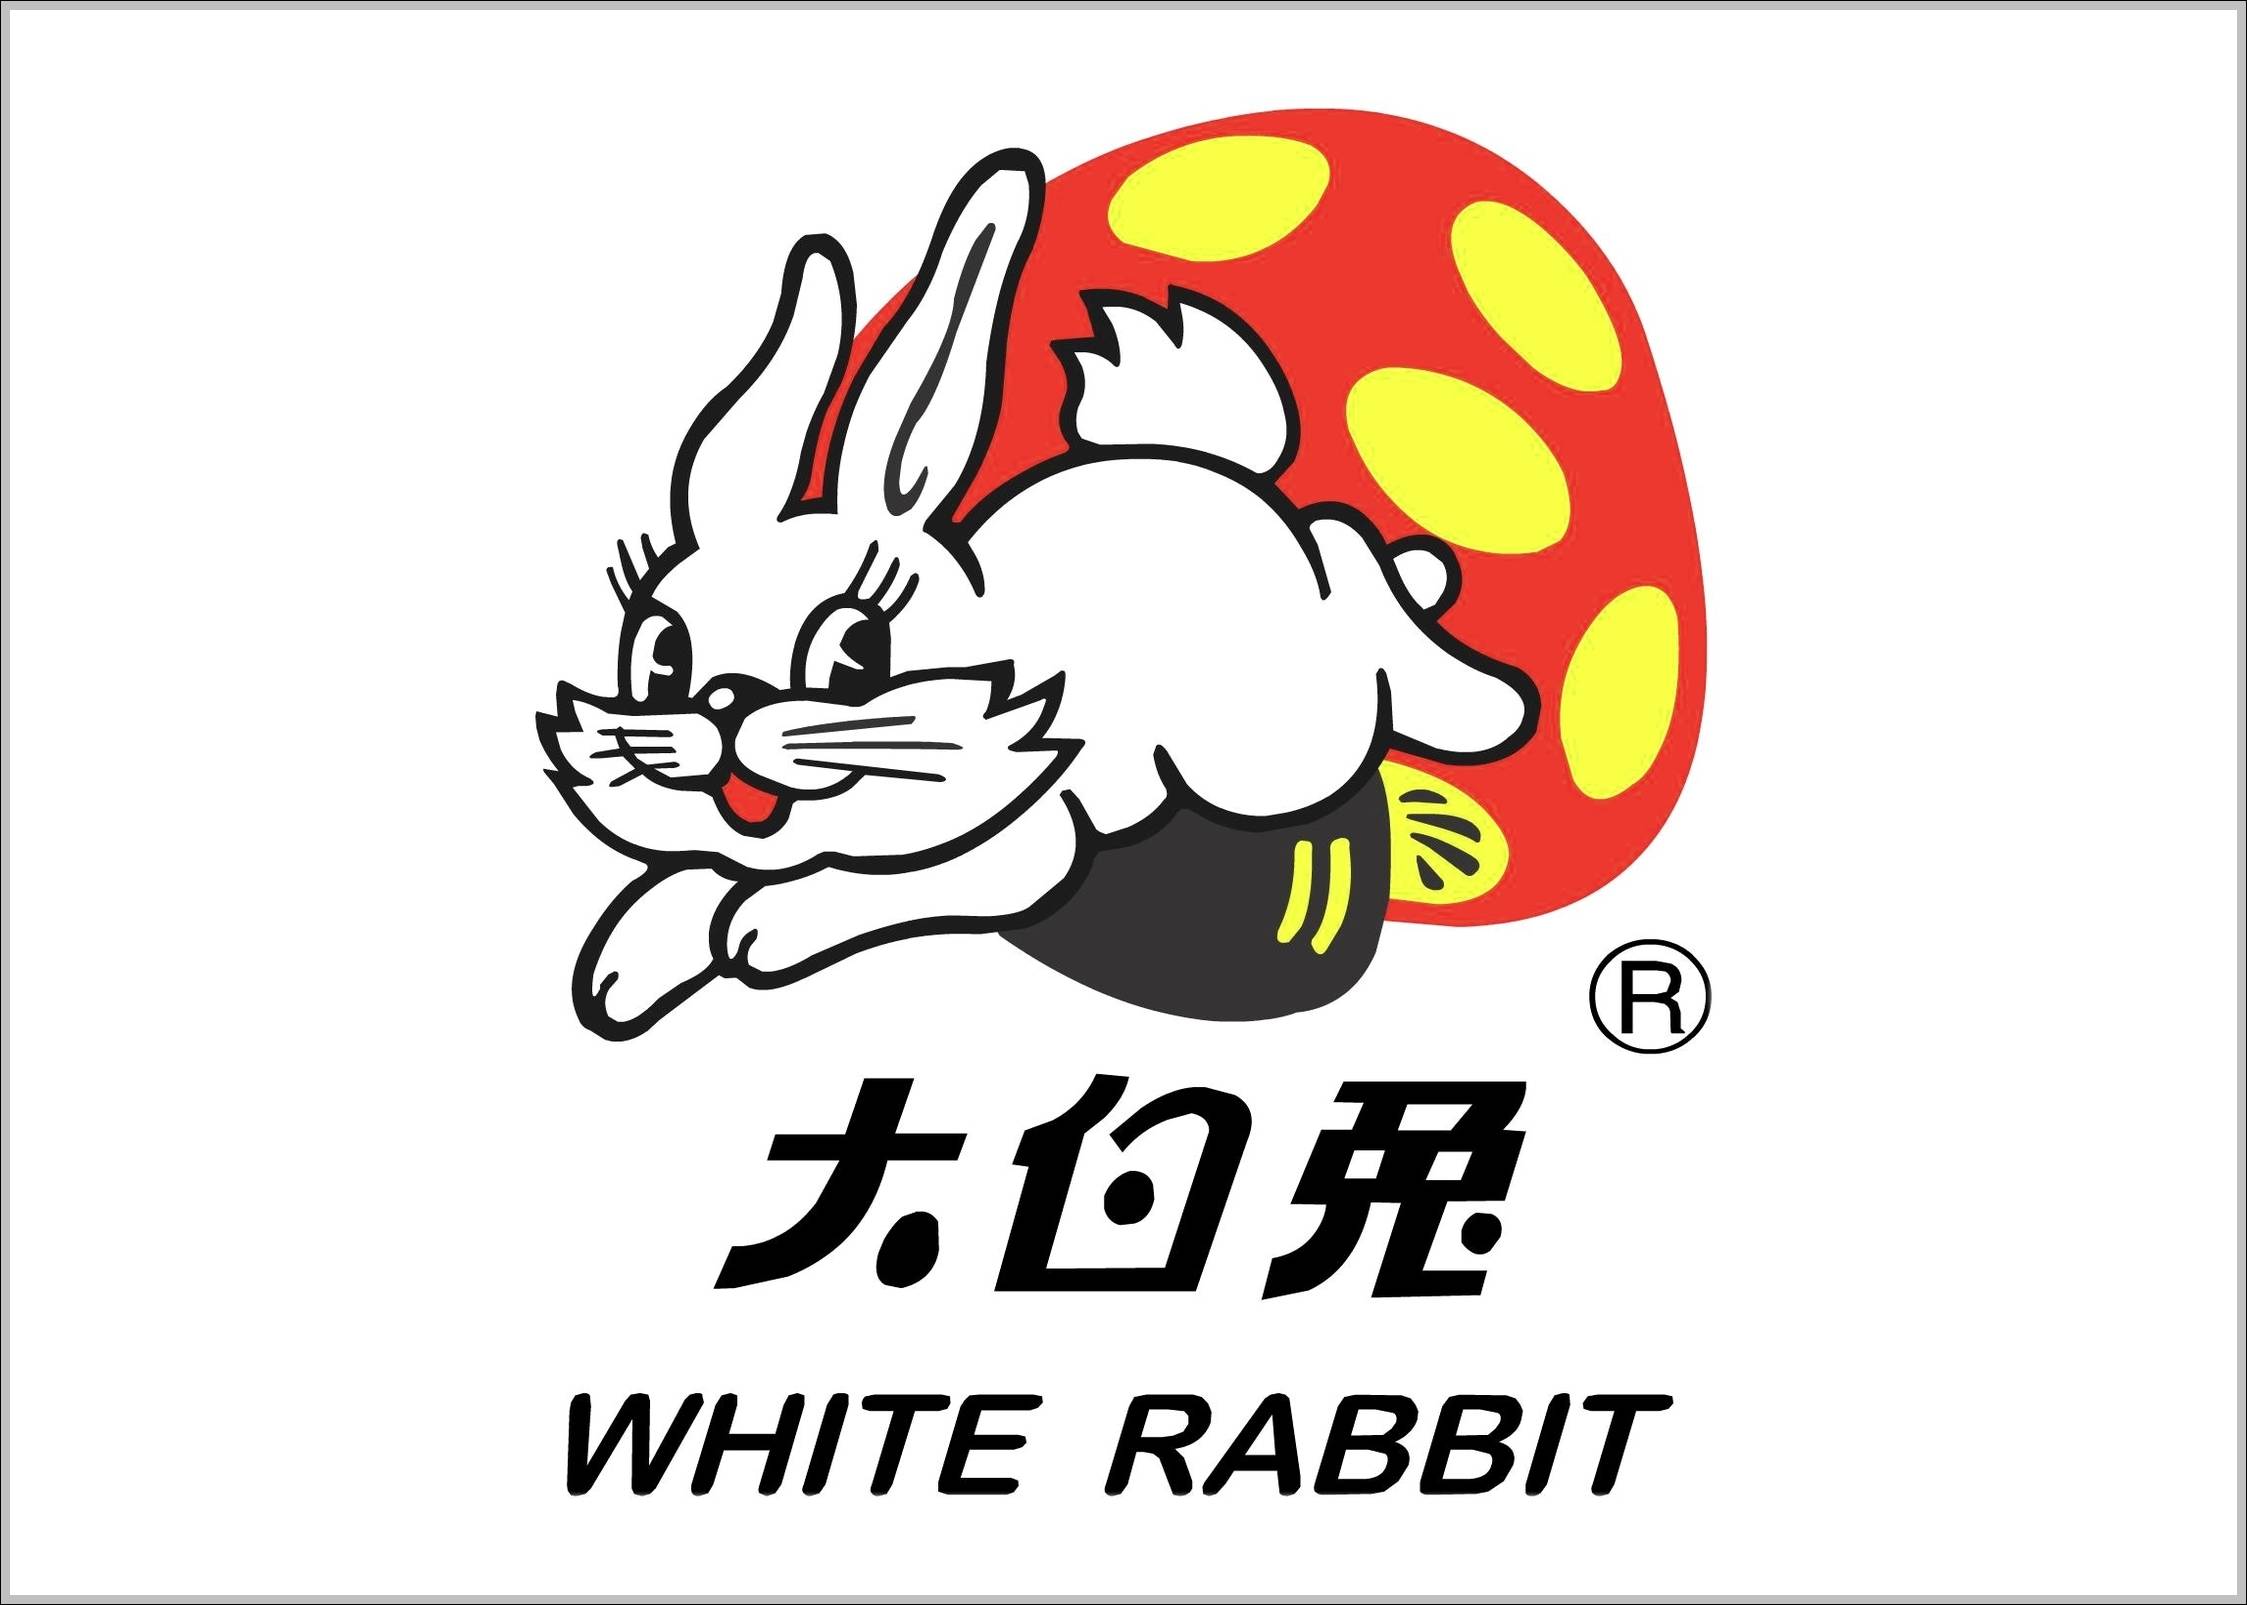 White Rabbit Dabaitu logo